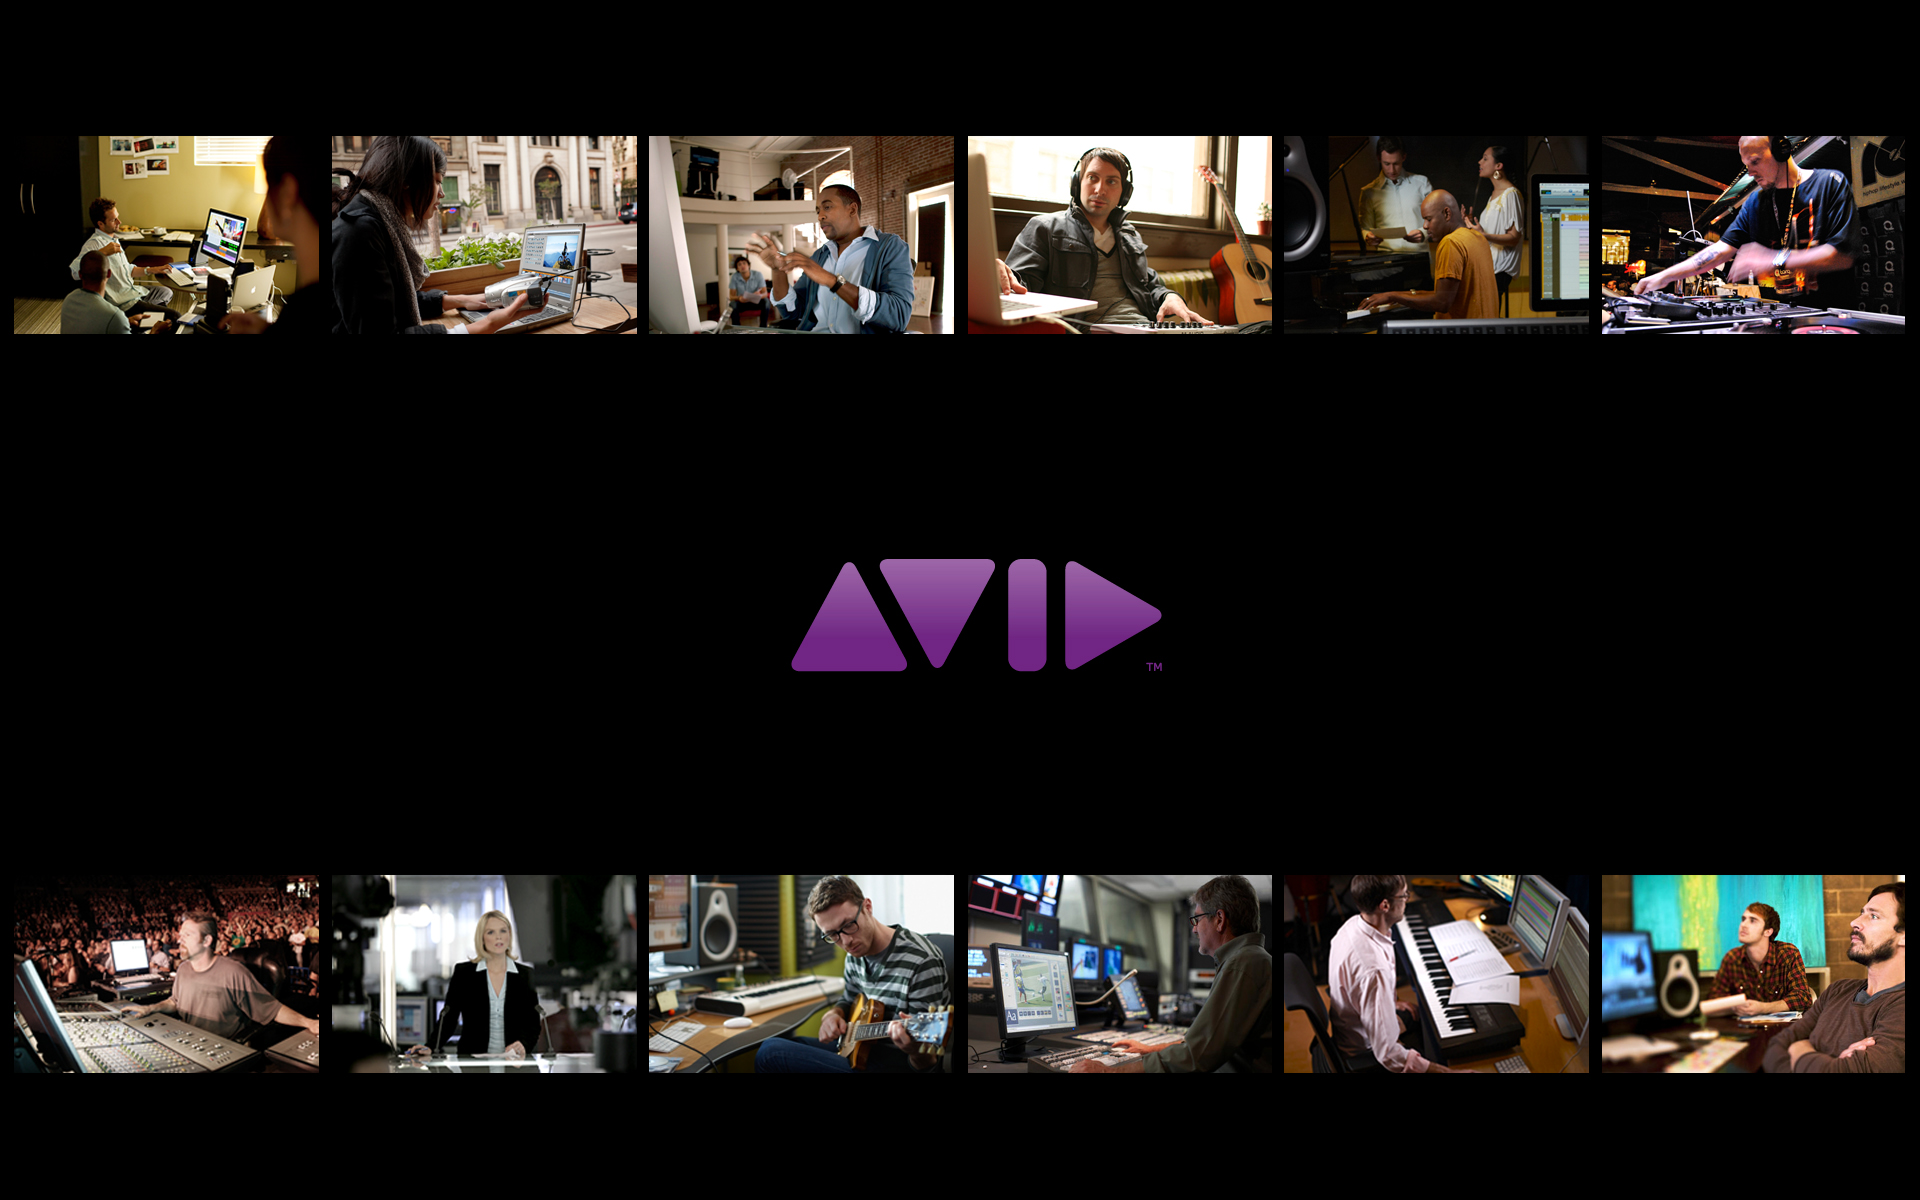 Download desktop wallpaper for your Avid system - Avid Community